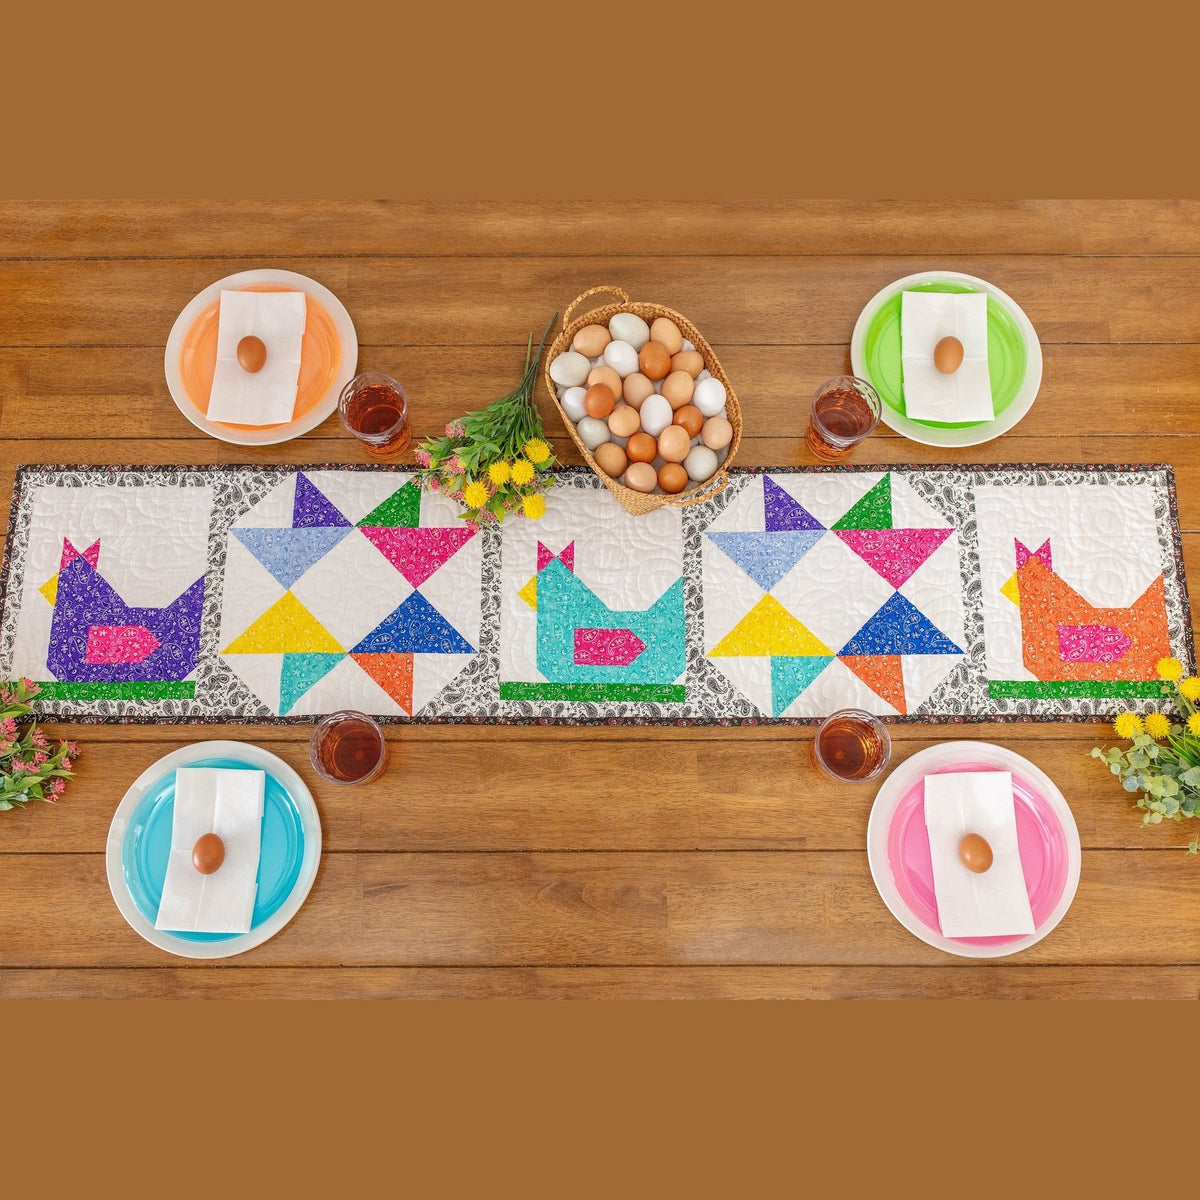 The Hen House Table Runner Quilt Kit Fabric Pattern Binding Backing ALL PRE CUT 16" X 60" Beginner Friendly